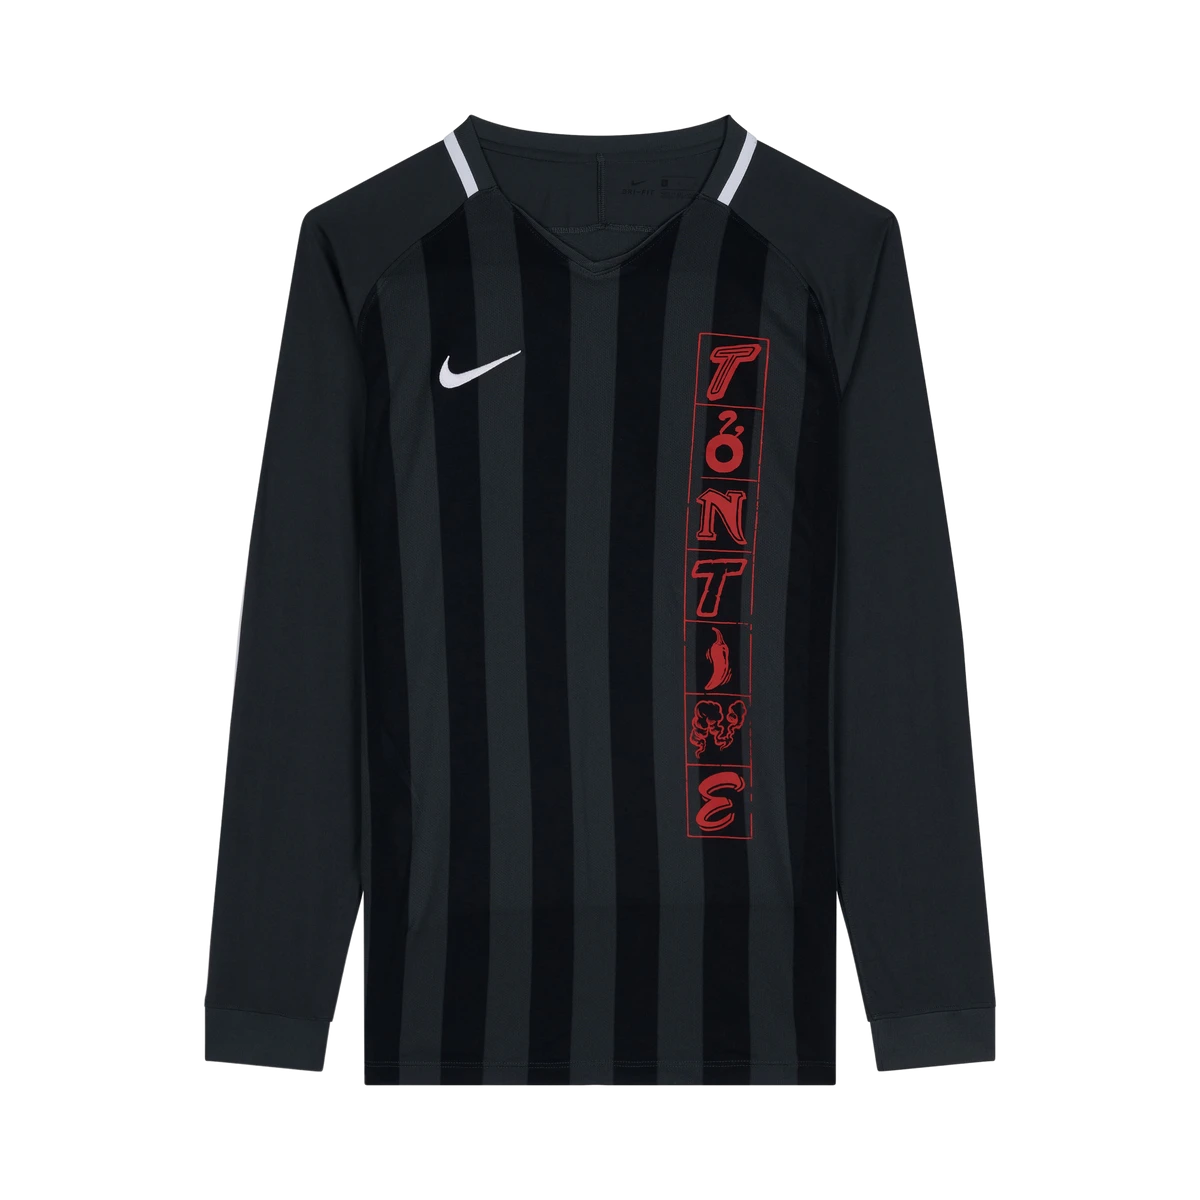 x Nike soccer jersey